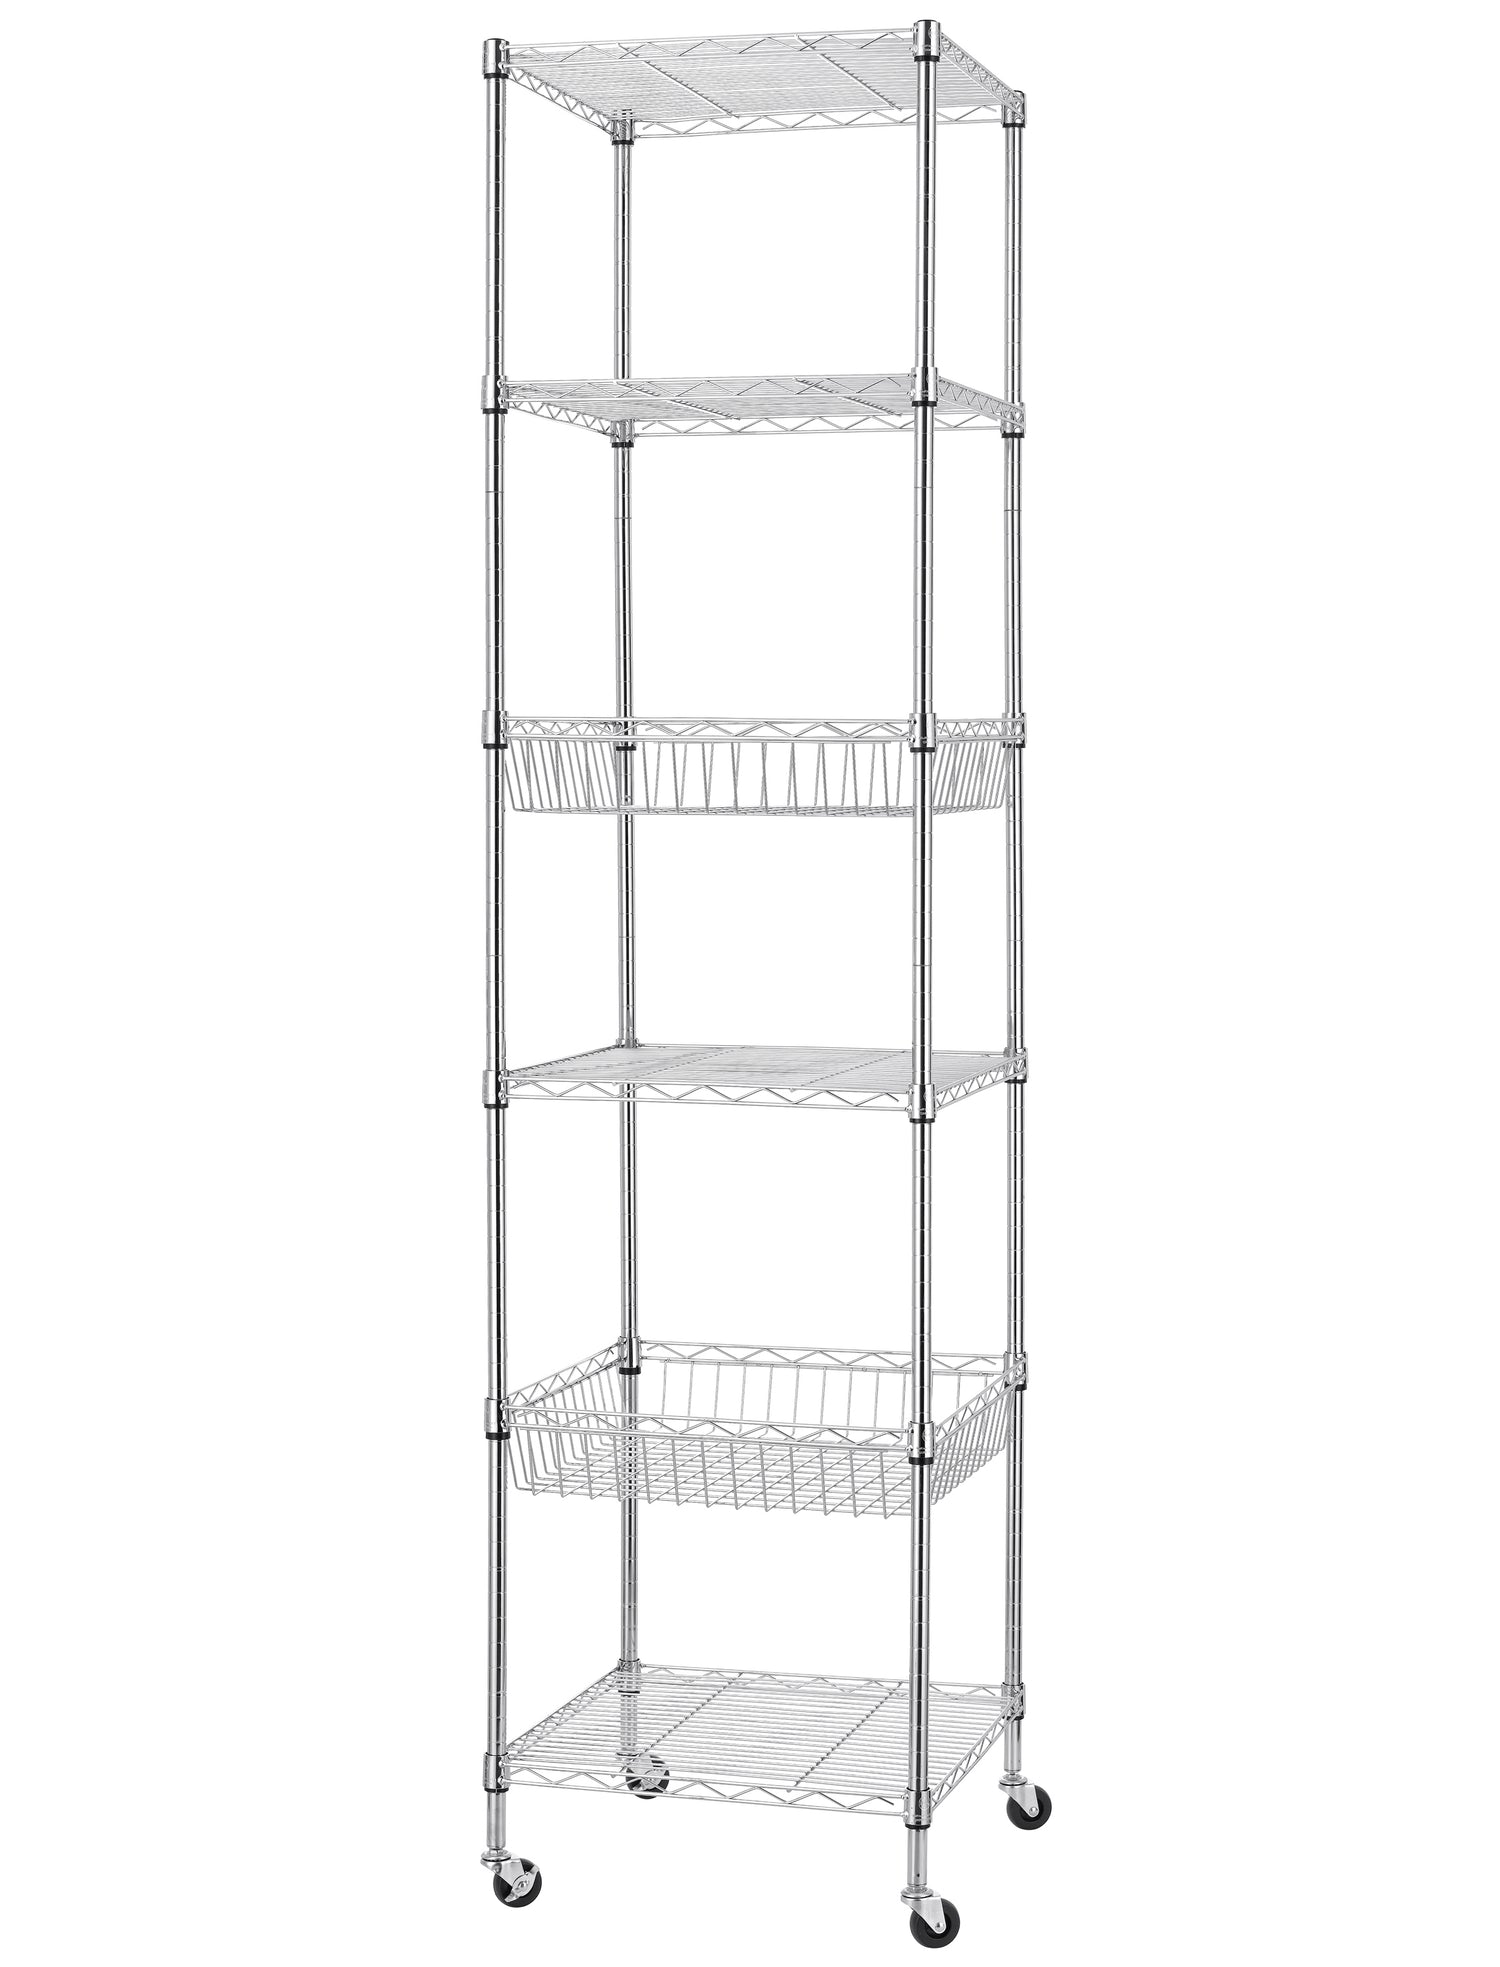 Storage Shelves & Shelving Units